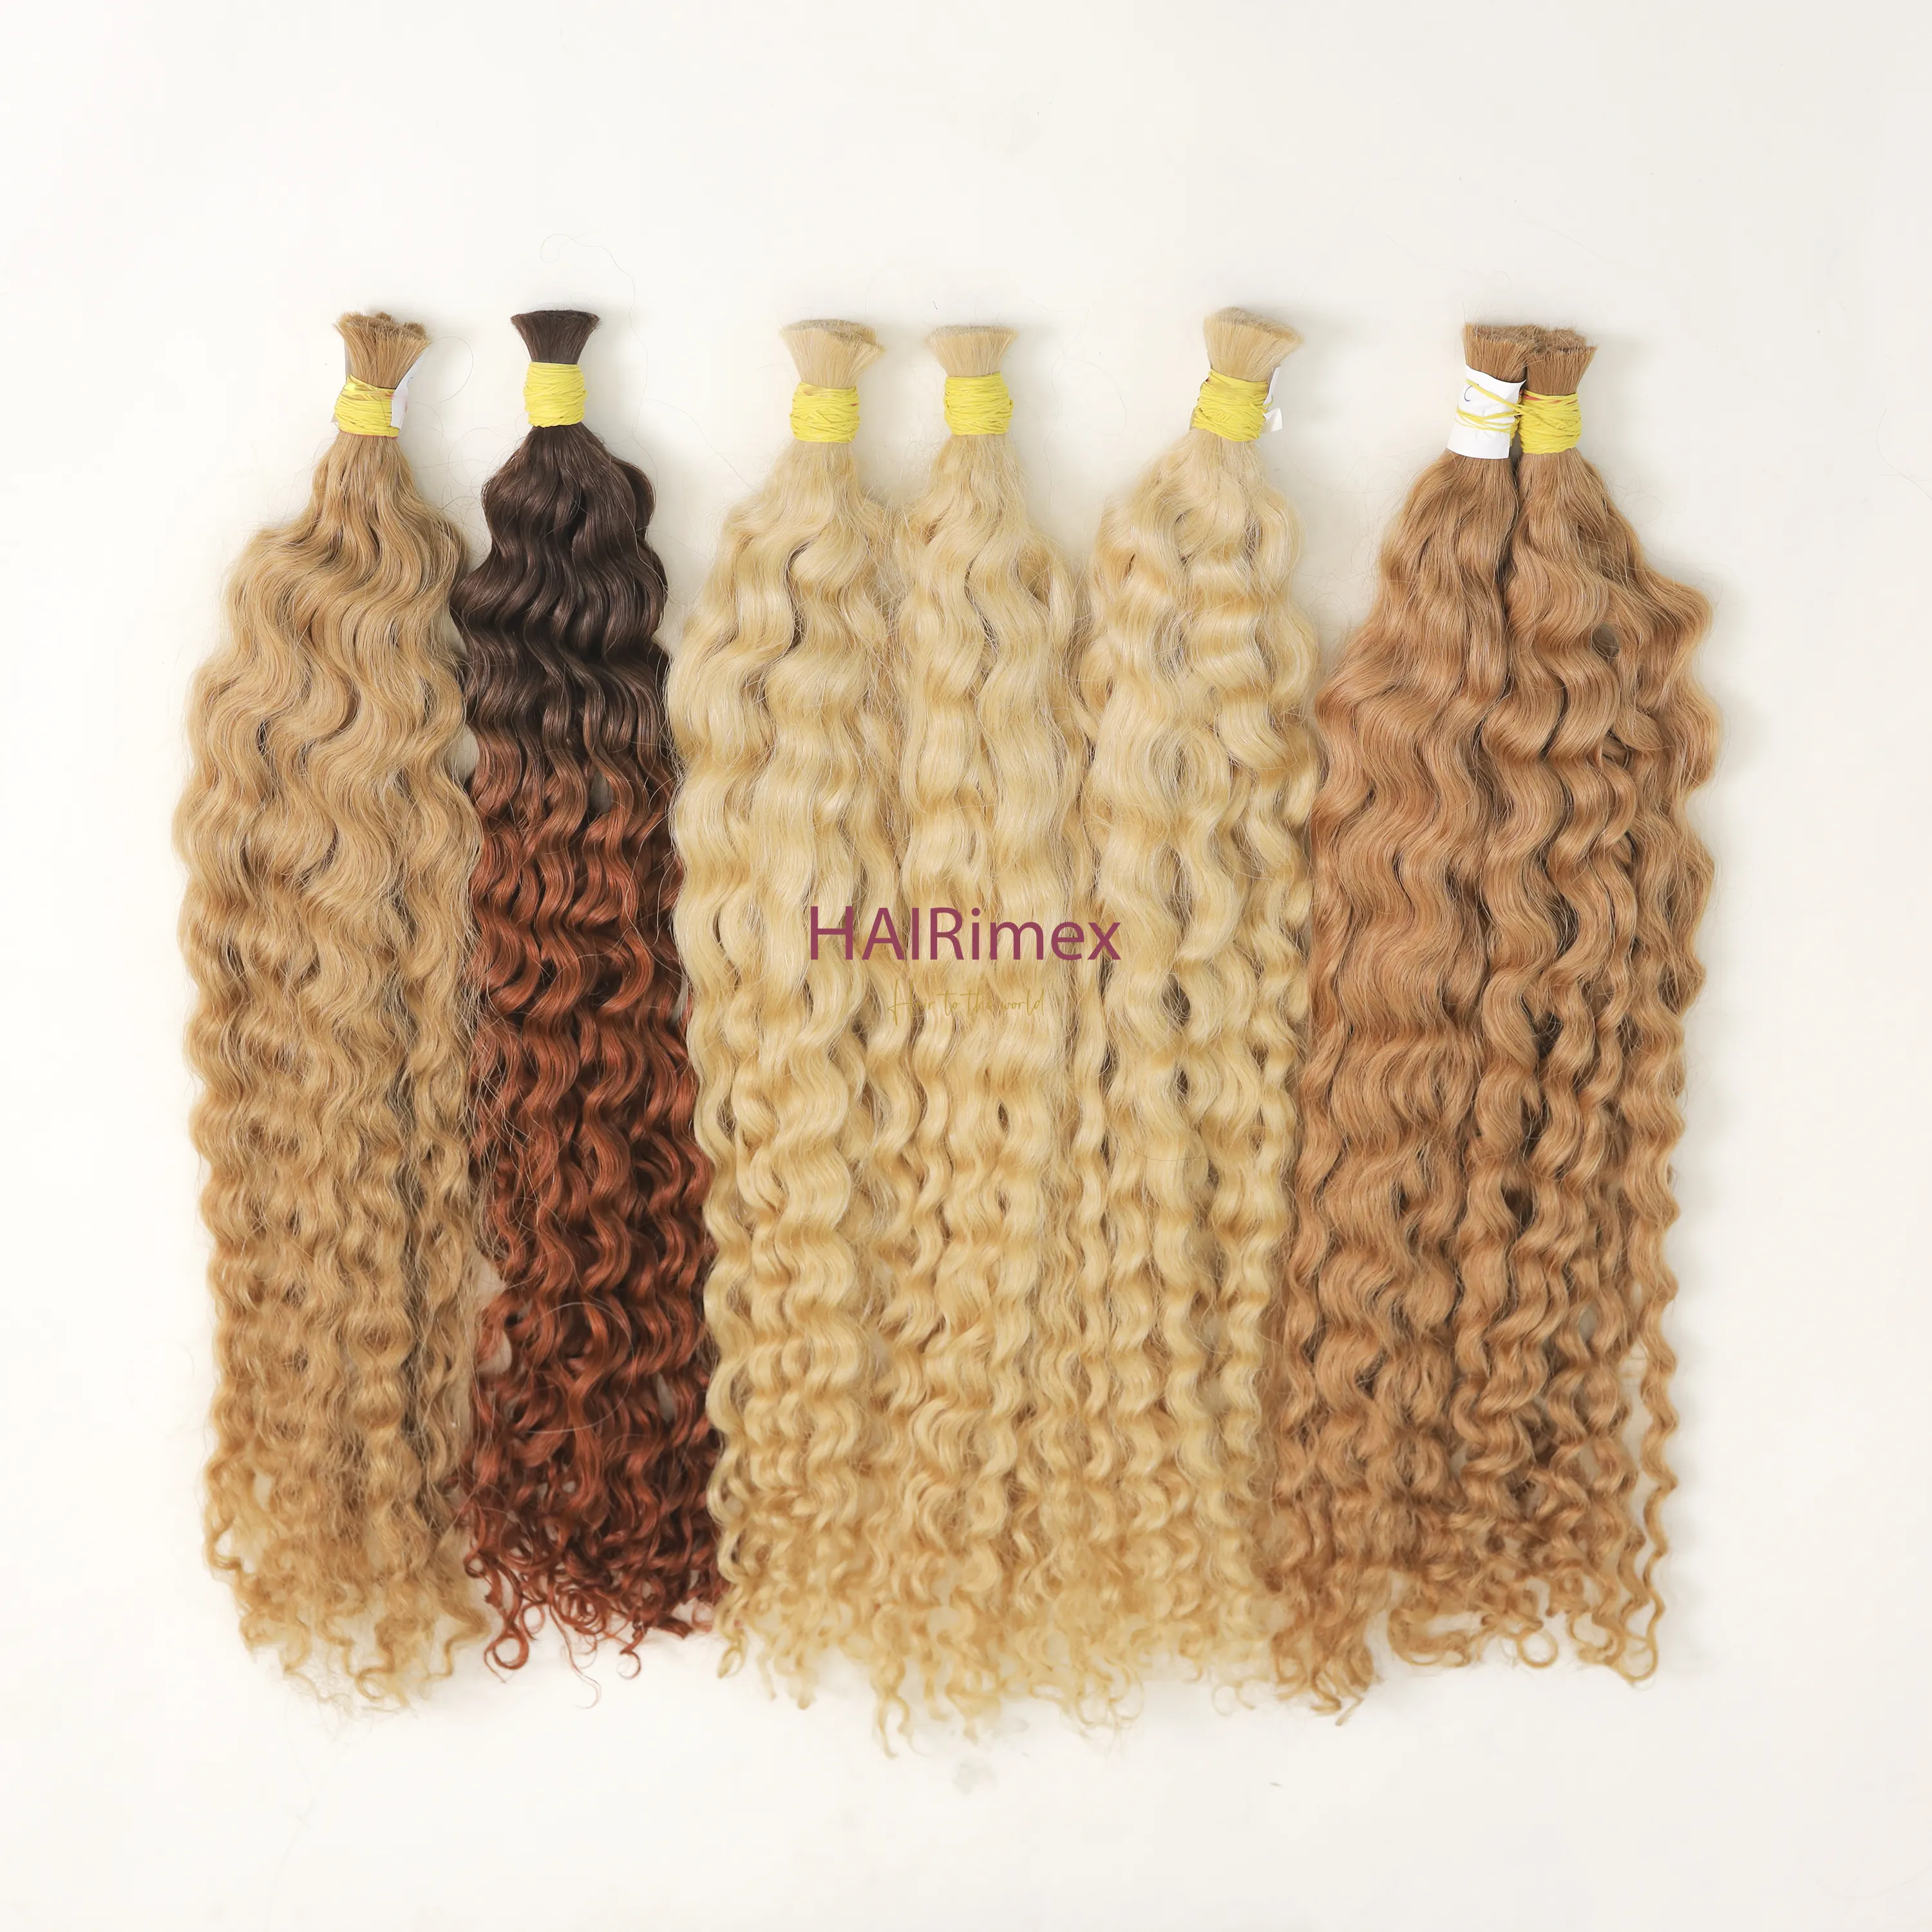 Cabello a granel de 6-32 pulgadas de Hairimex de alta calidad listo para exportar desde Vietnam